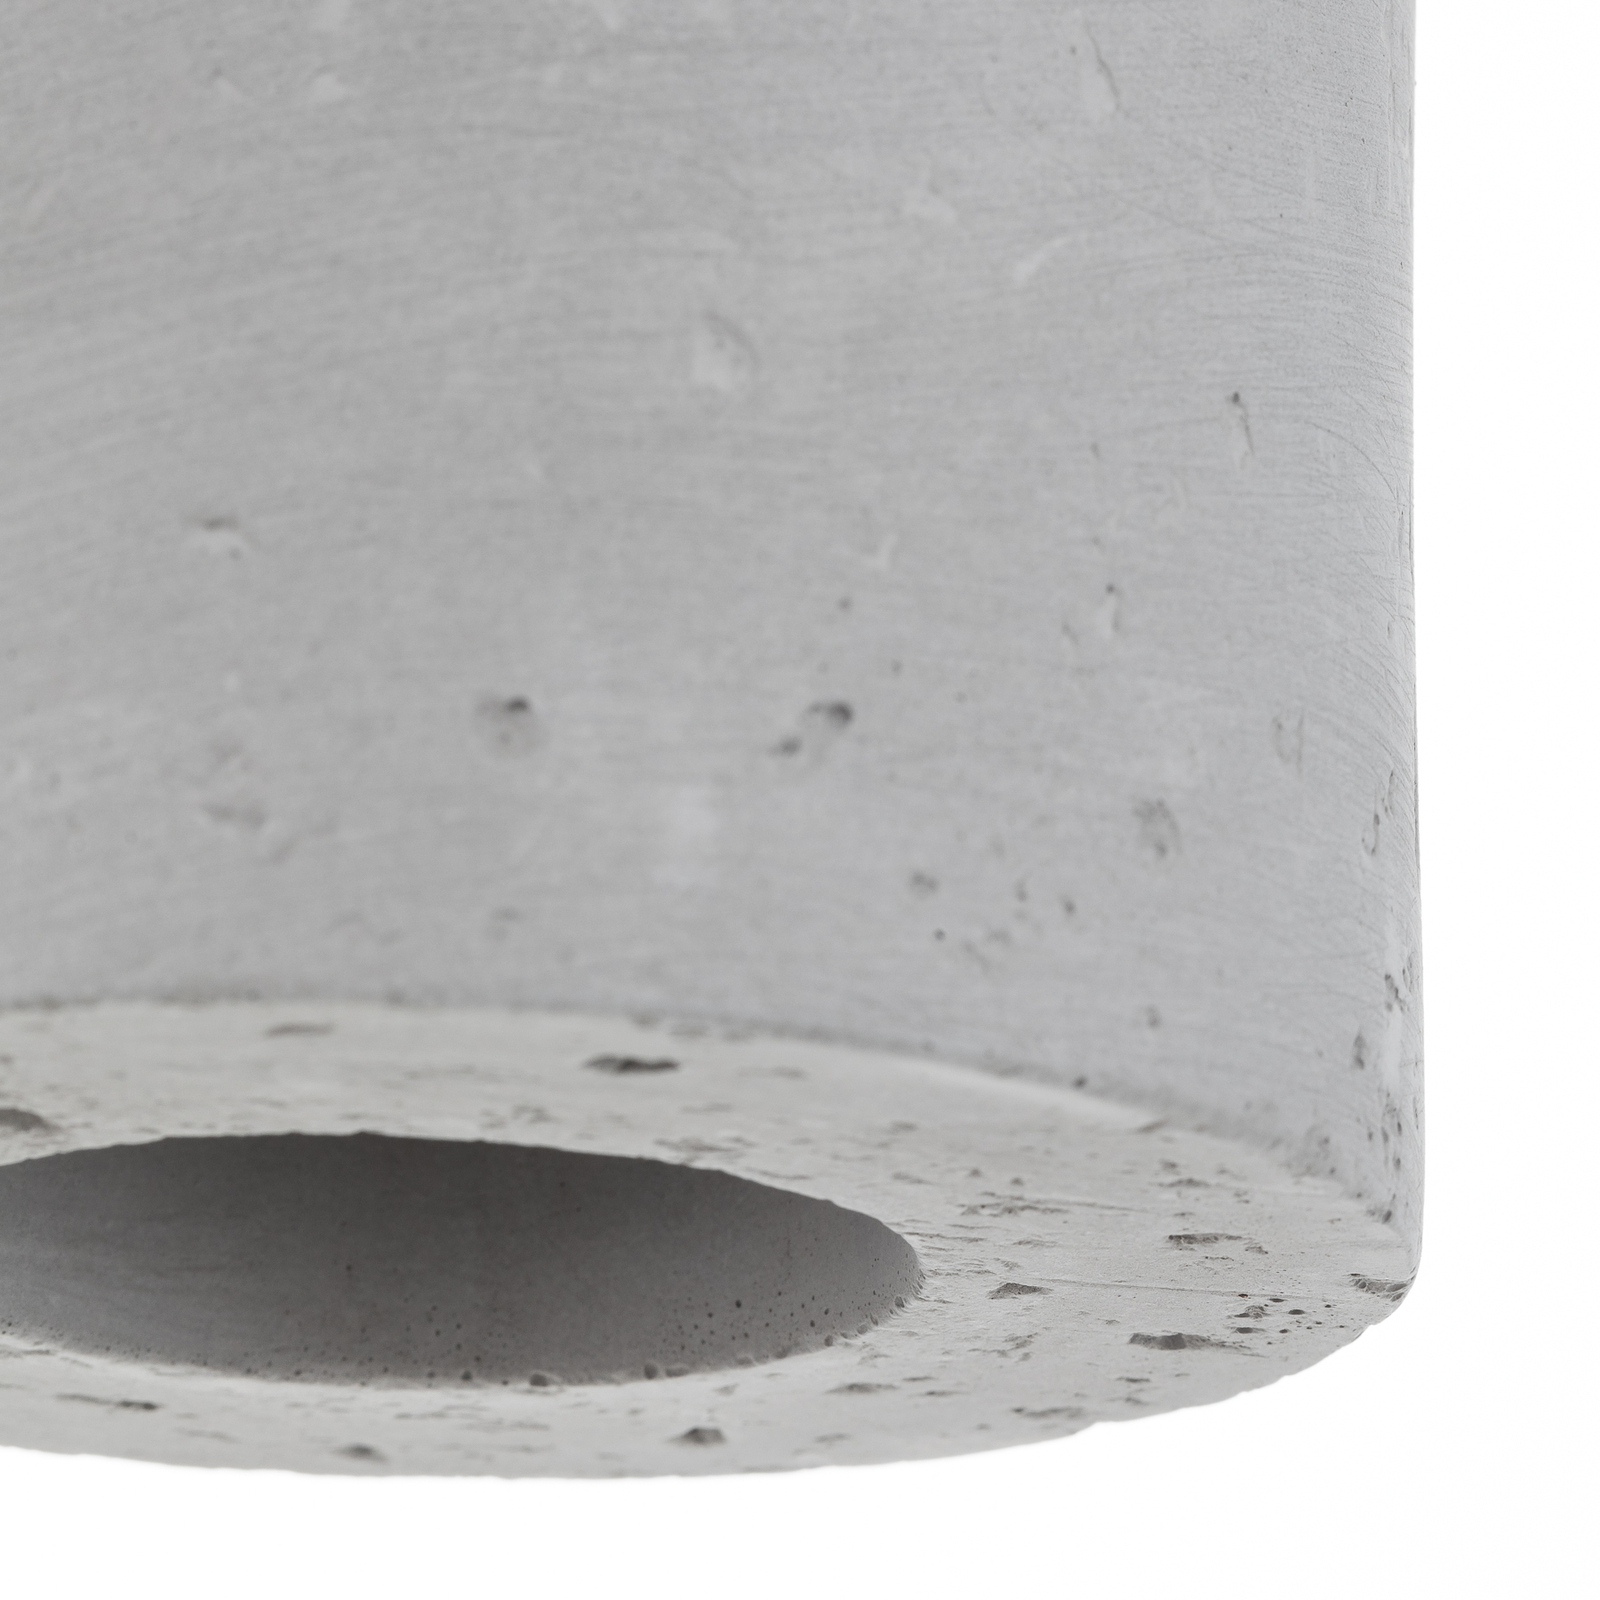 Ara loftslampe som en betoncylinder Ø 10cm